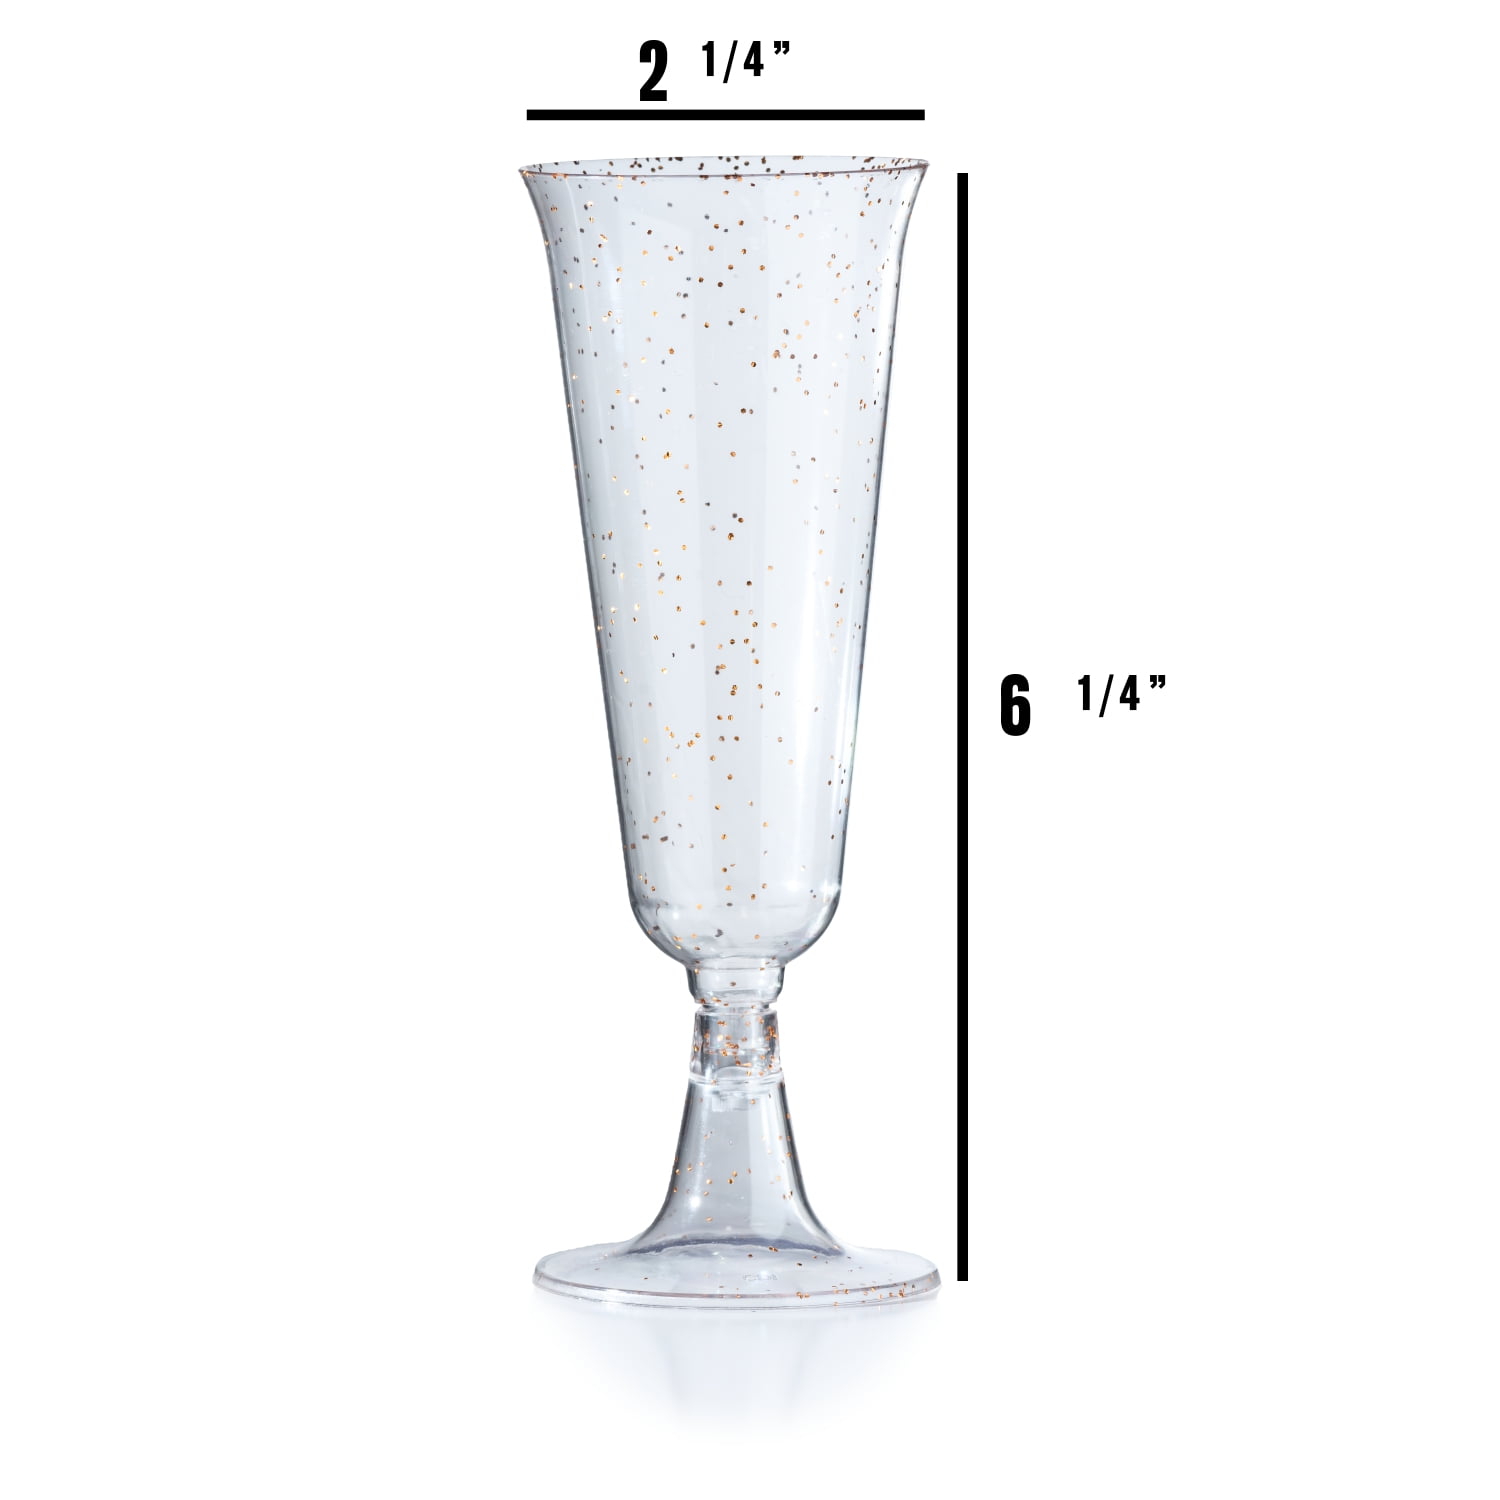 Niceshop foldable plastic champagne wine glasses set of 5, reusable,  foldable wine glasses with stor…See more Niceshop foldable plastic  champagne wine